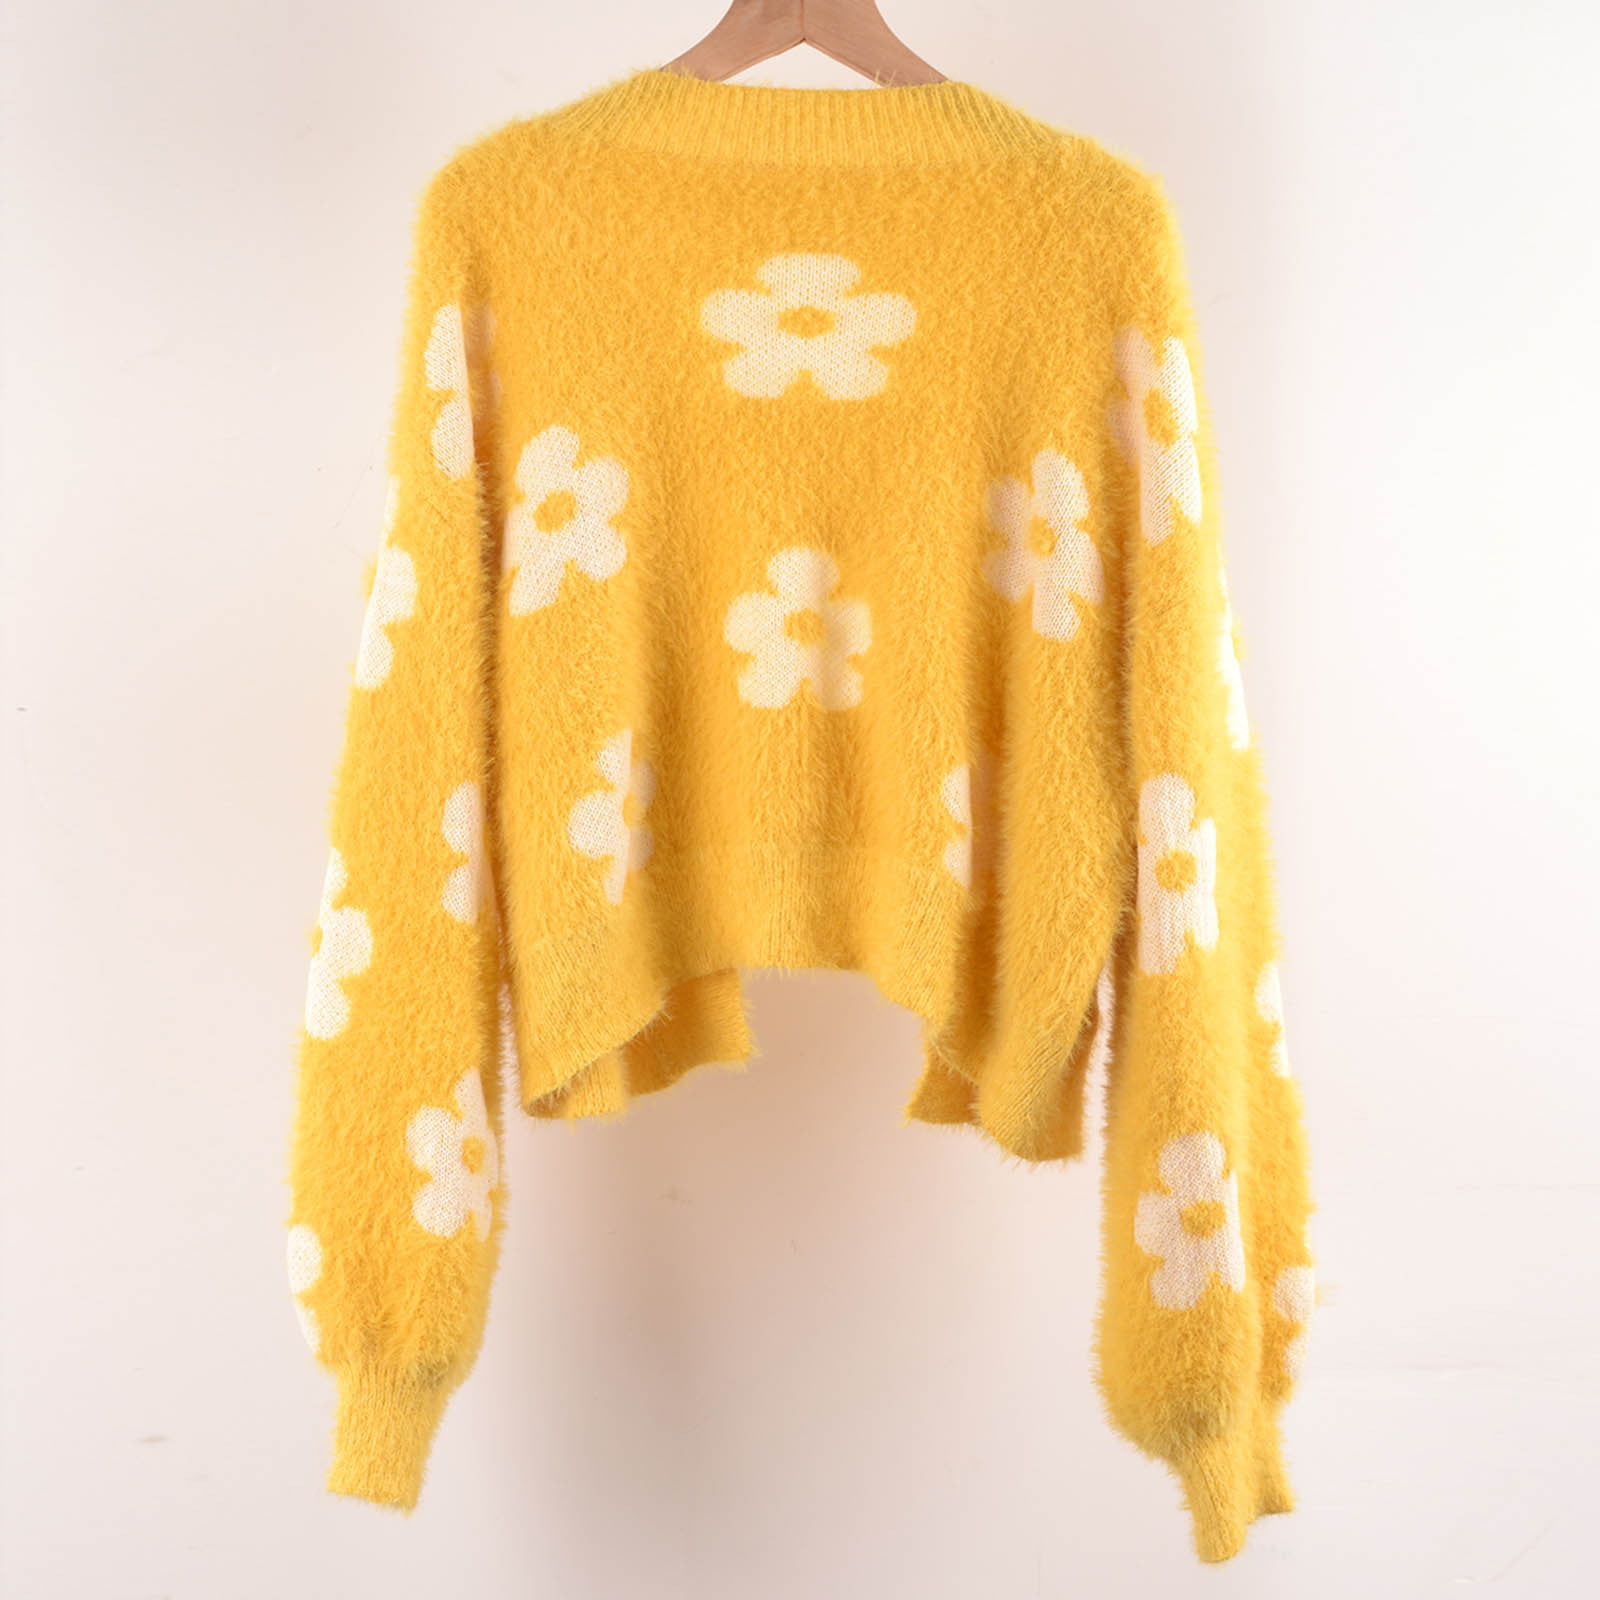 Juebong Christmas Deals 2022 Fashion Women V-Neck Long Autumn Sweater Cardigan Blouse Button Pullver Tops,Yellow,L - Walmart.com